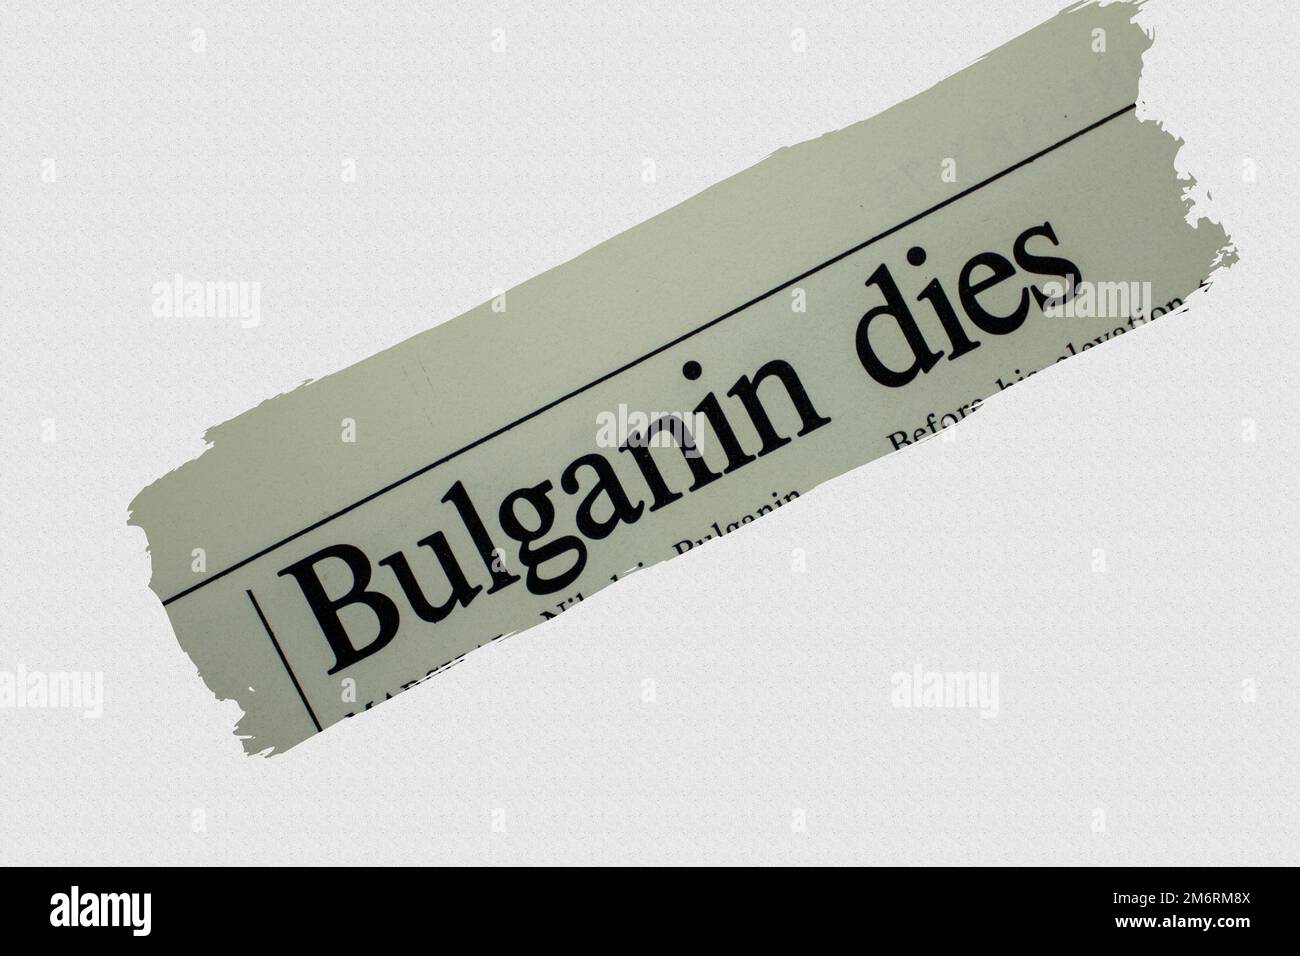 Bulganin dies - news story from 1975 newspaper headline article title with overlay Stock Photo